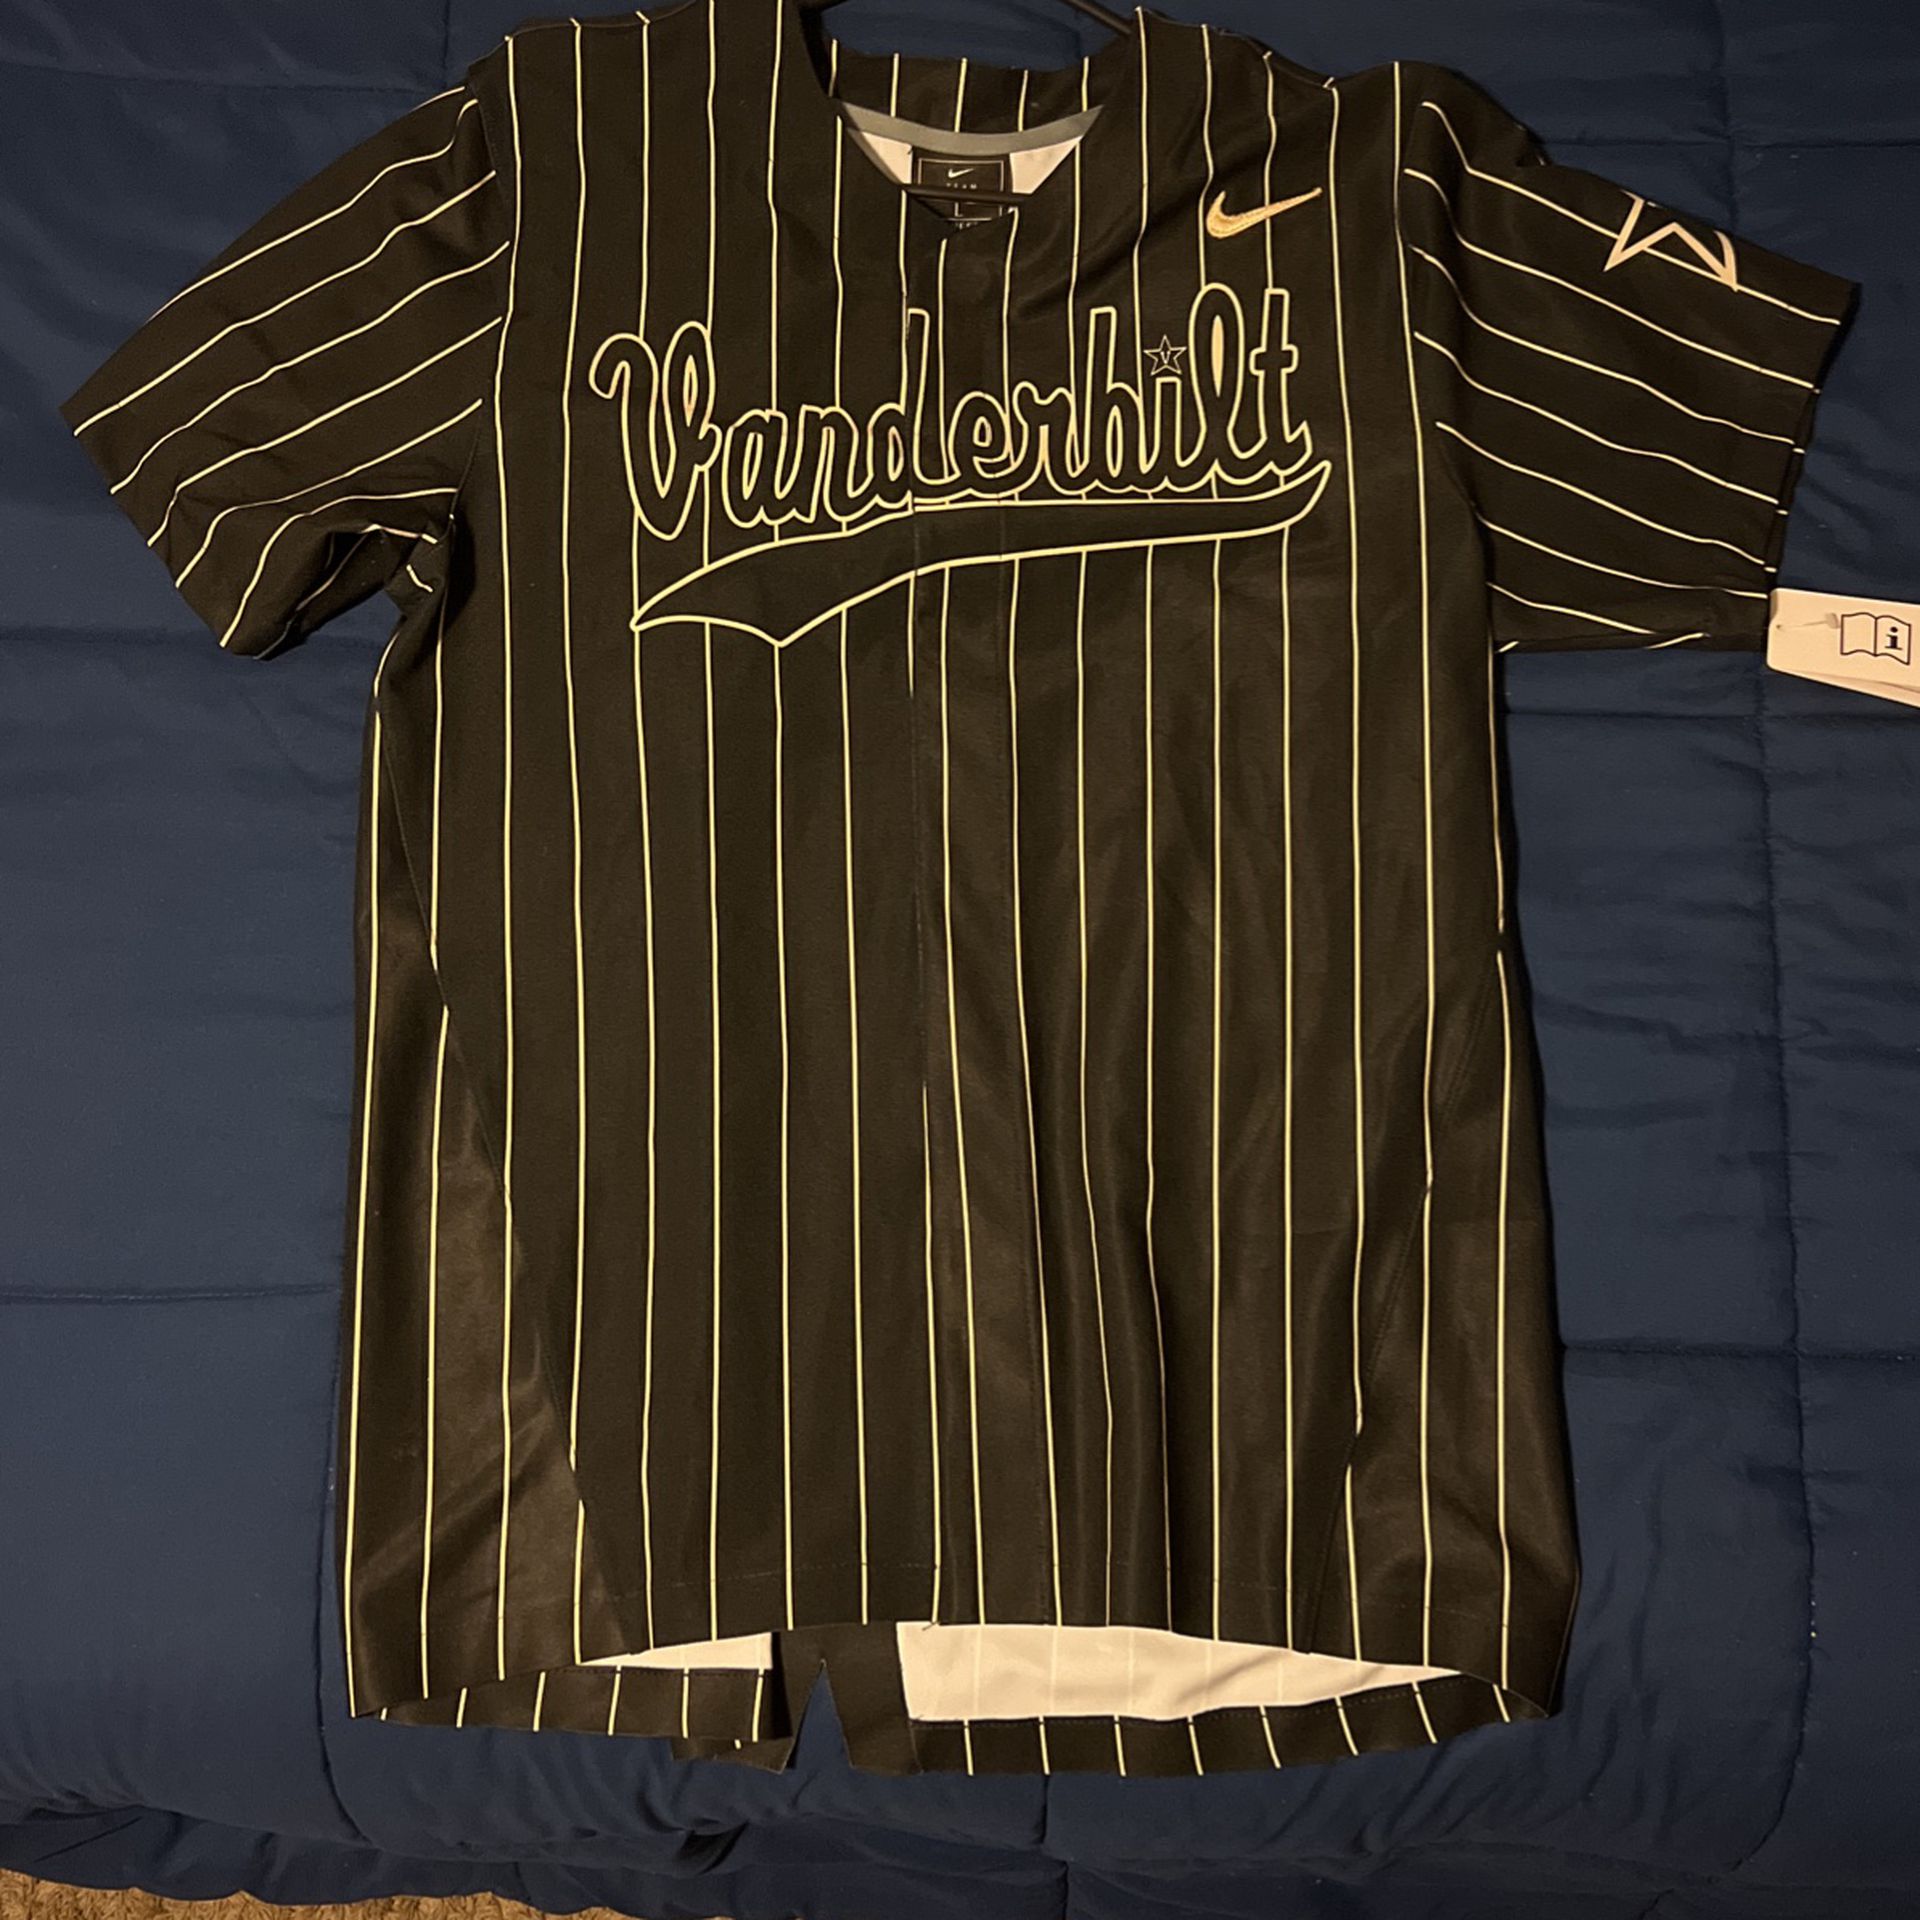 Vanderbilt Baseball Jersey for Sale in Chino Hills, CA - OfferUp